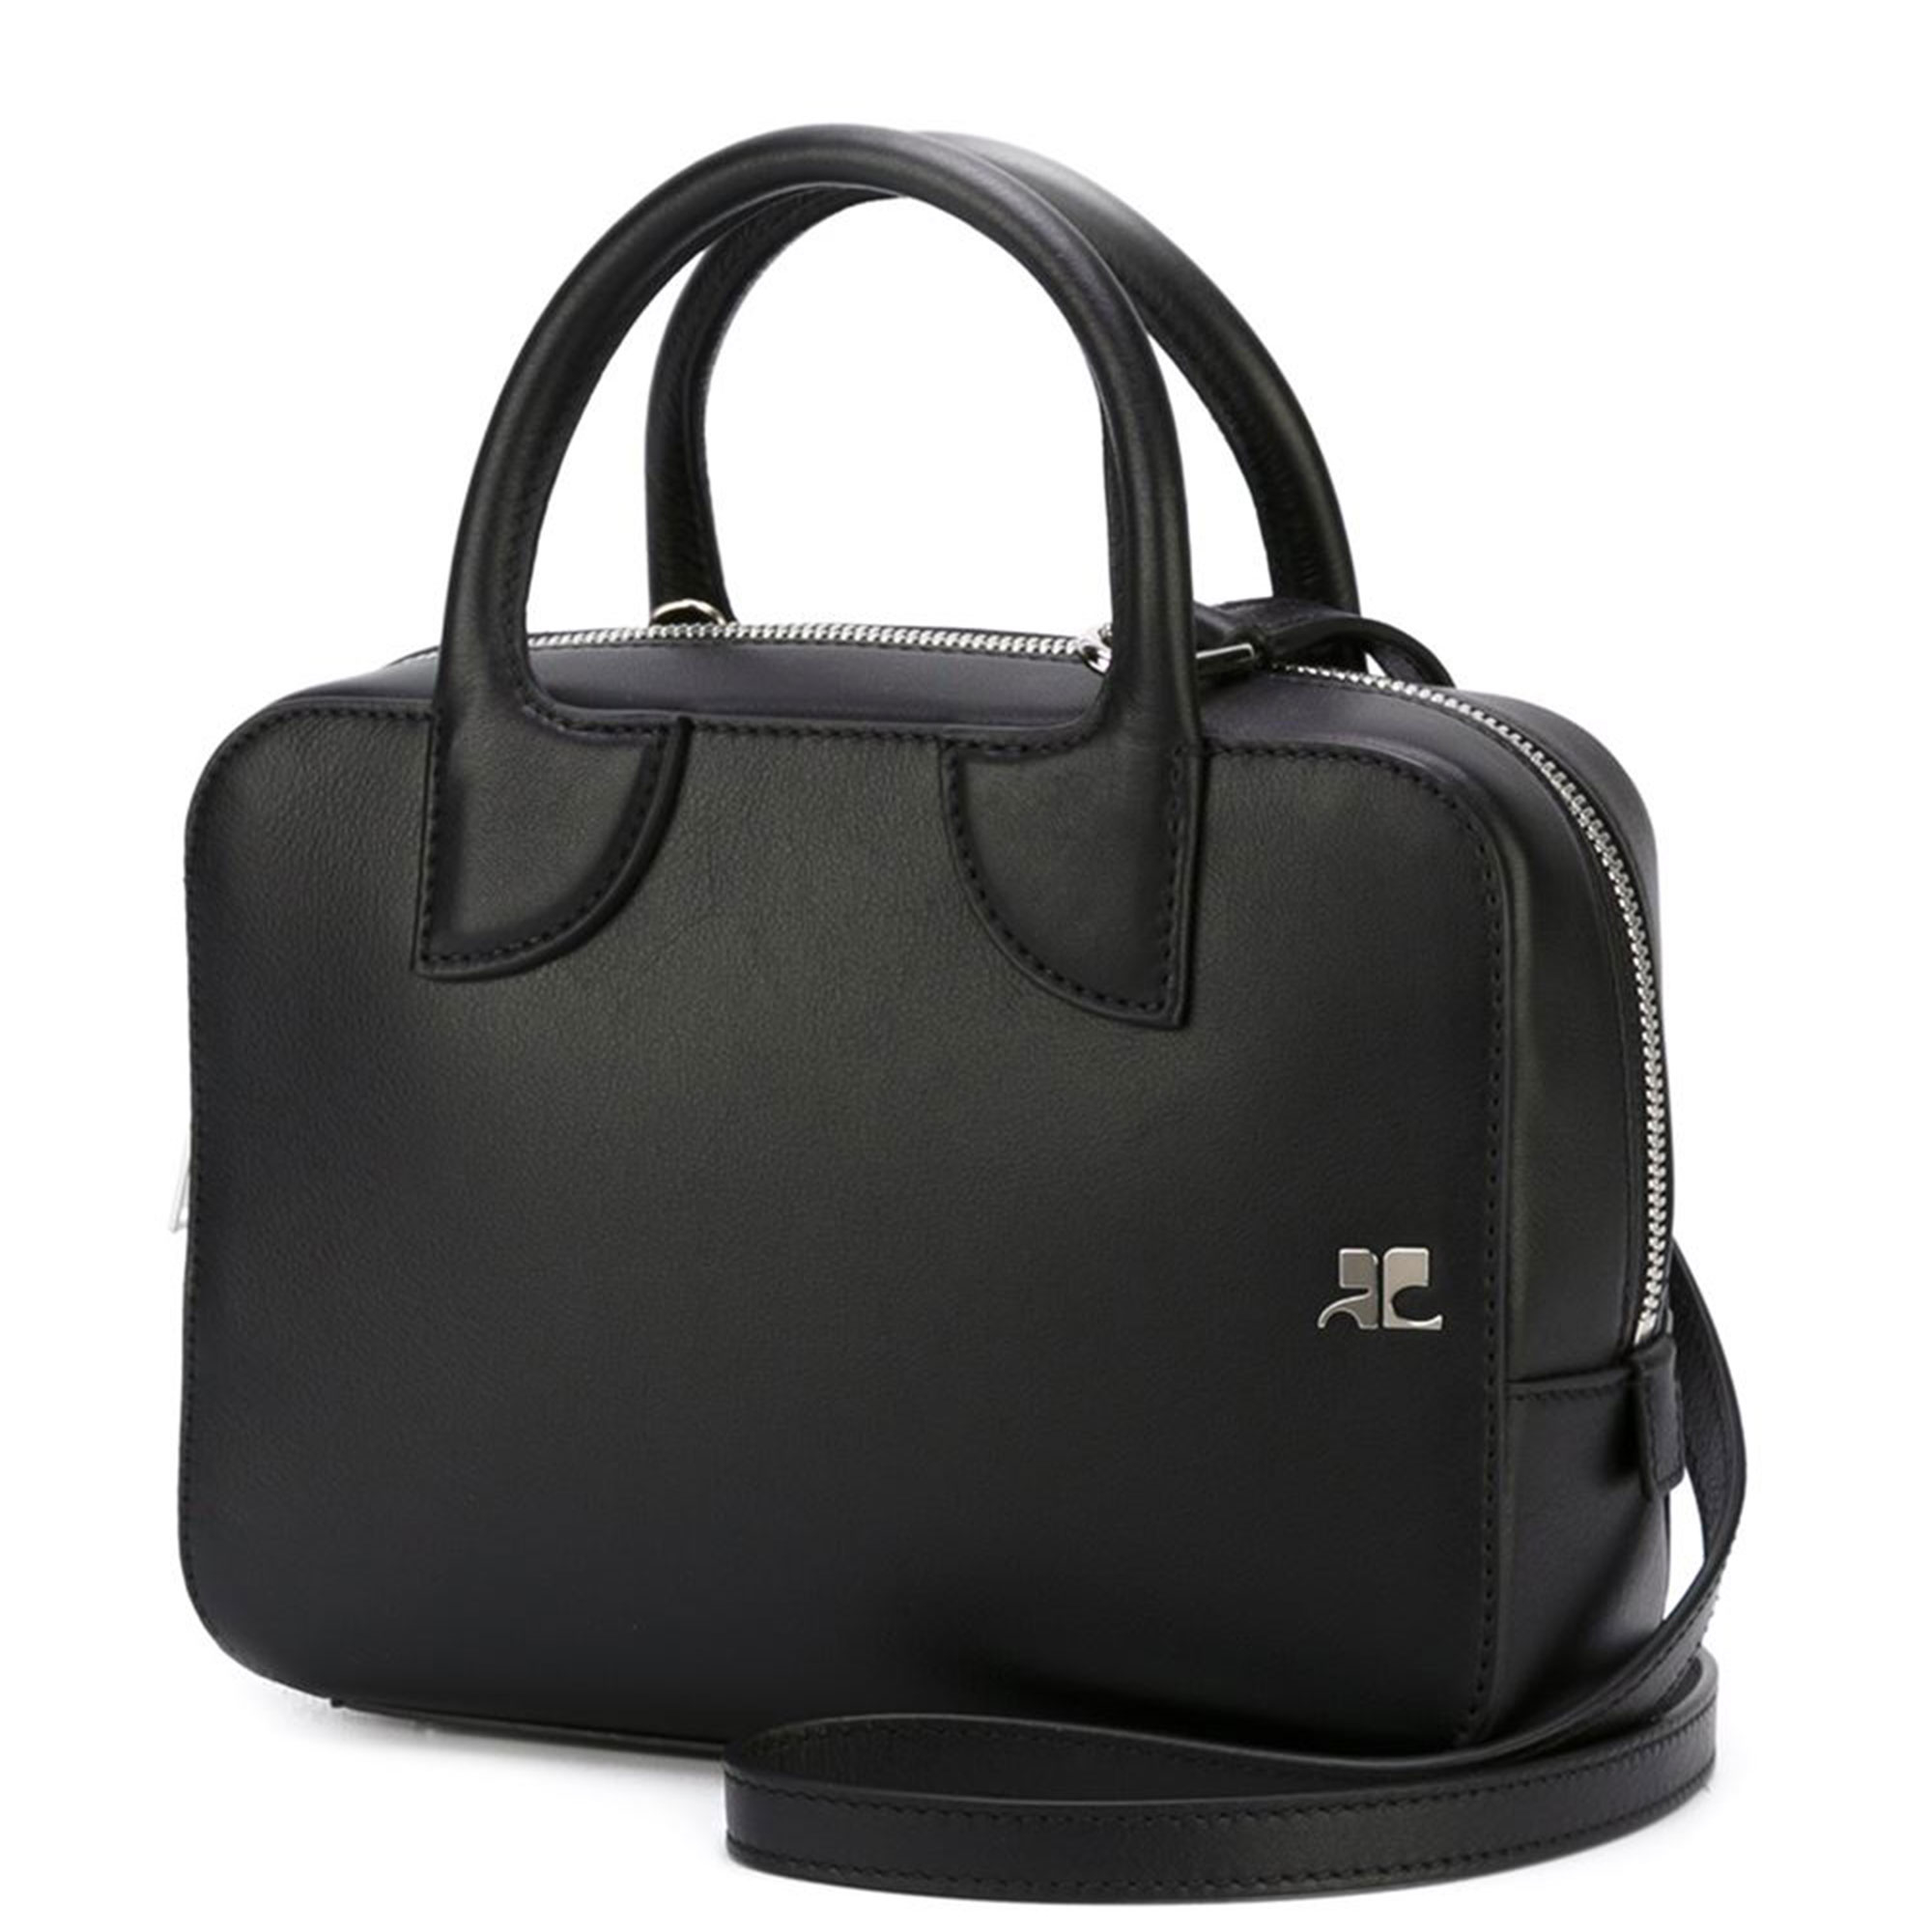 Courreges Mini Bag in Black - Lyst